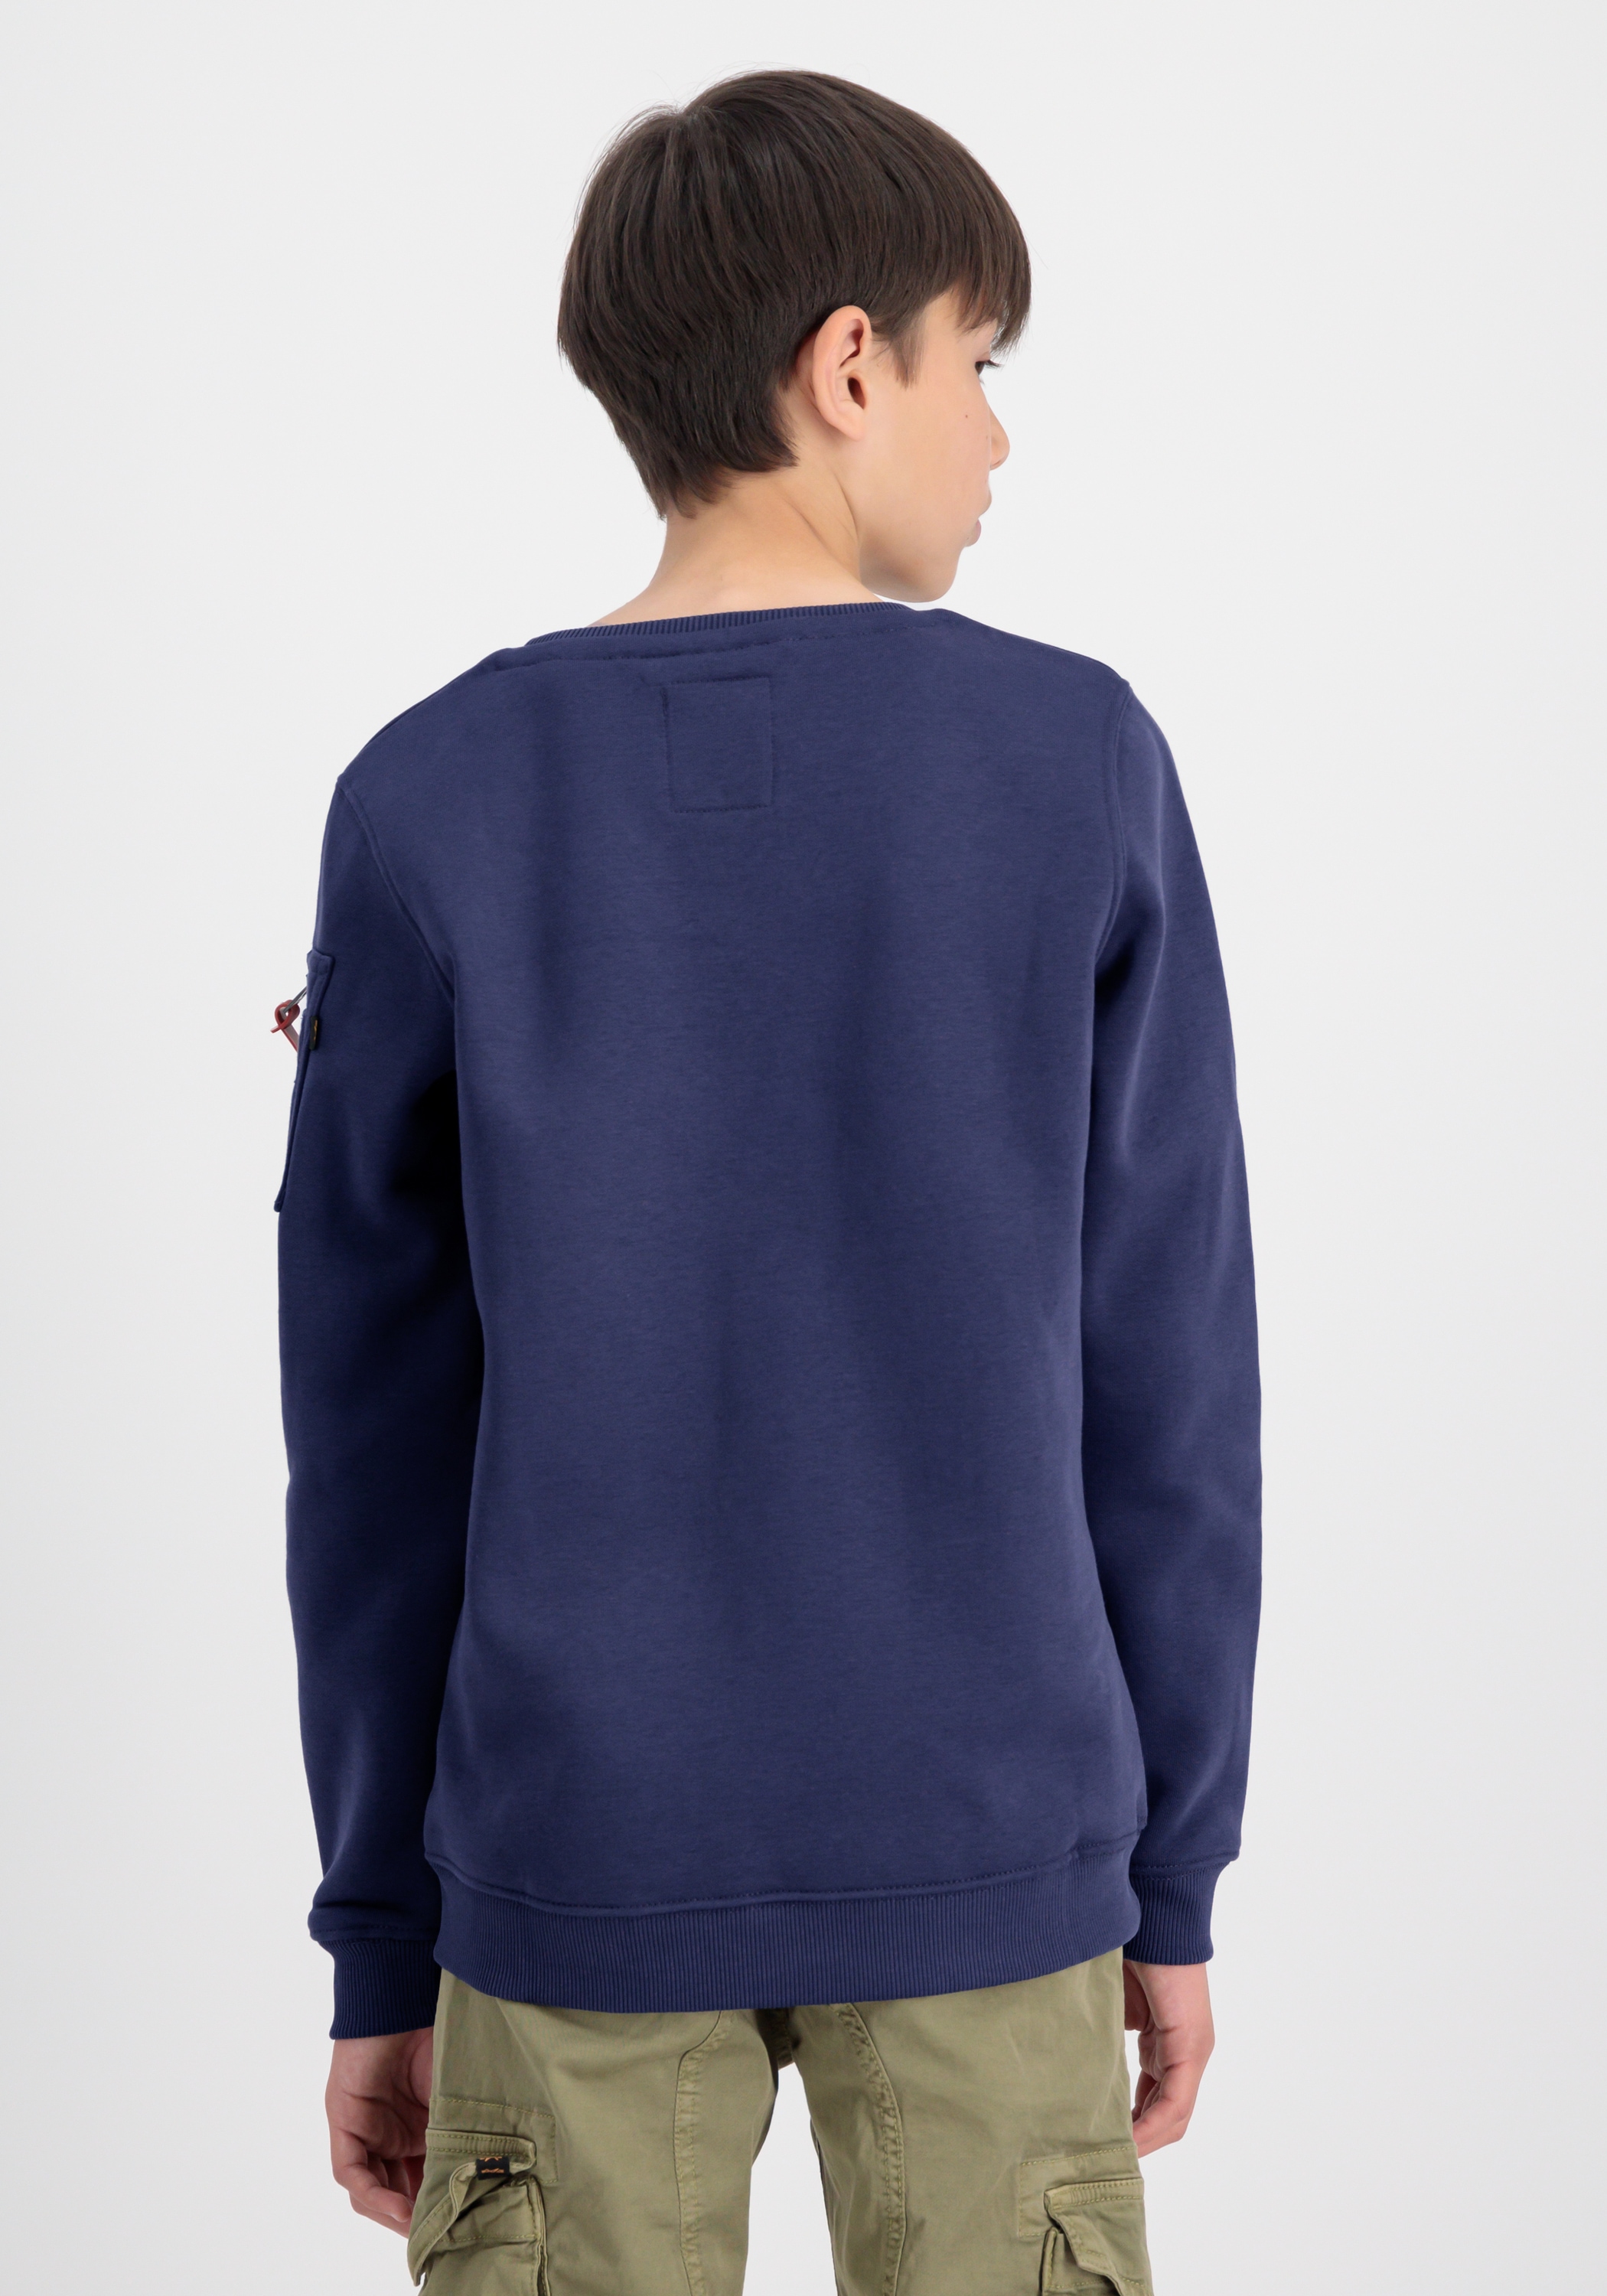 Alpha Industries Sweater »ALPHA INDUSTRIES Kids - Sweatshirts«